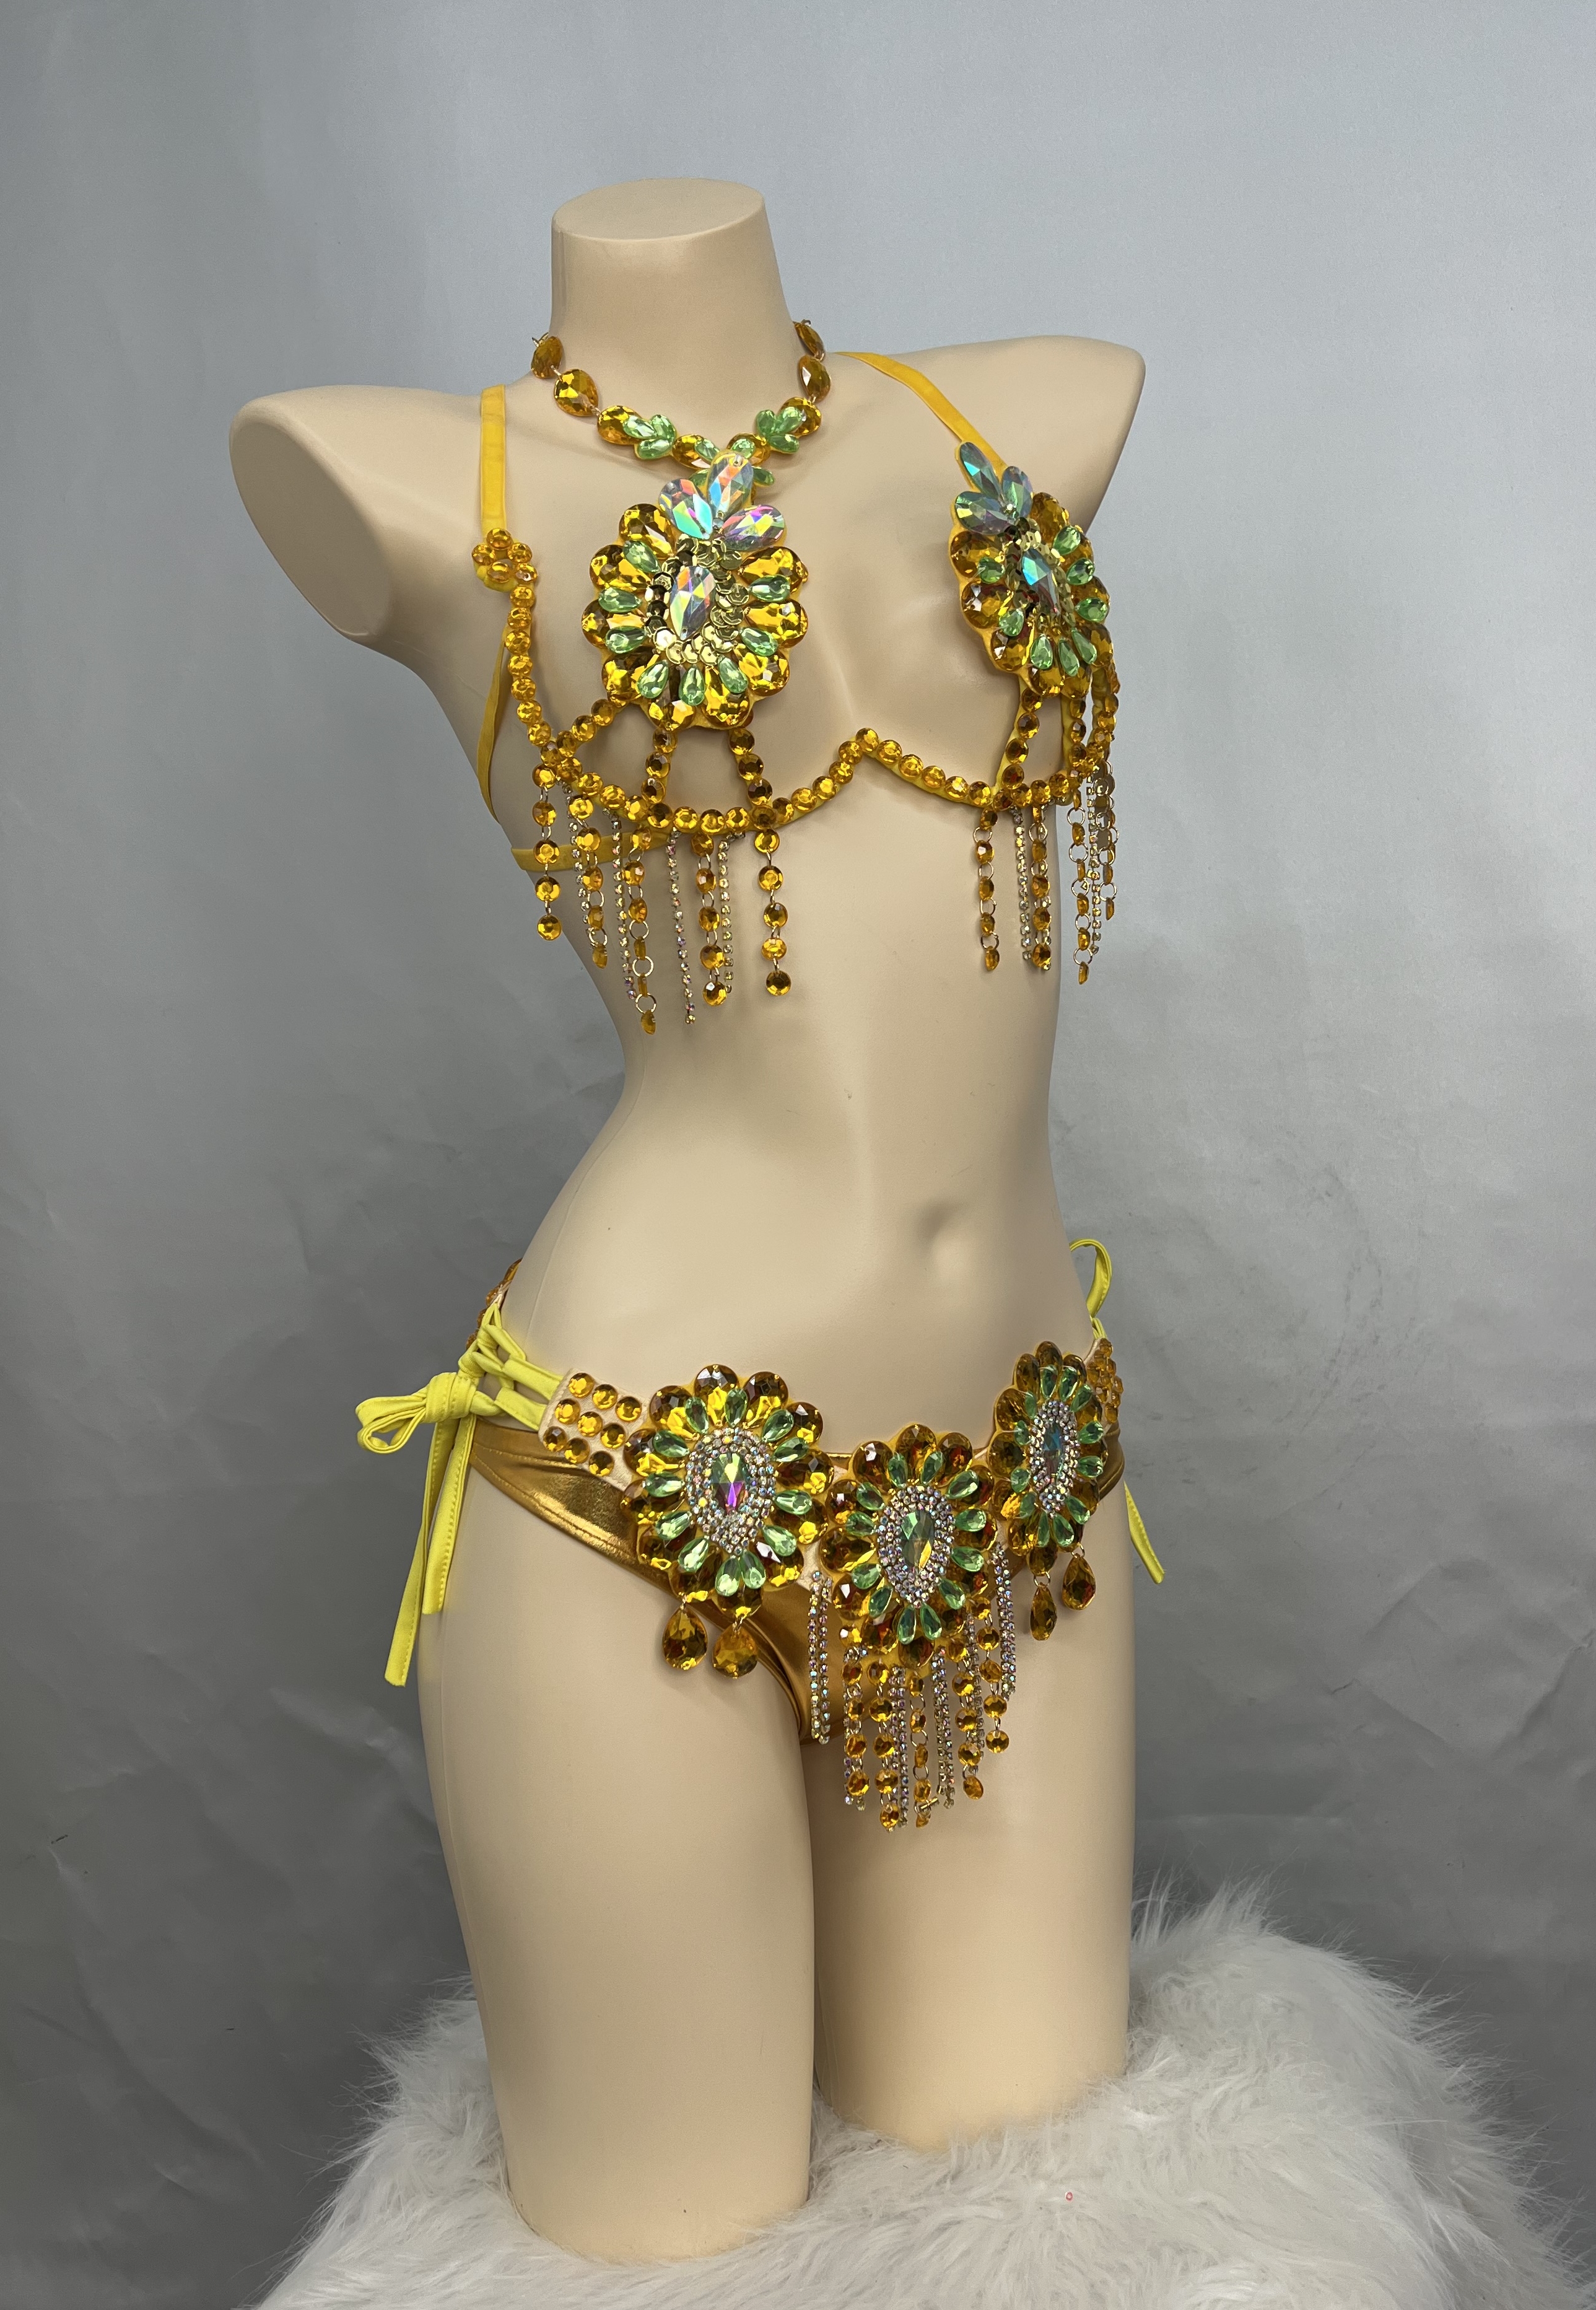 BQYQFXX Sexy Samba Carnival For Women Wire Bra & Belt Stones Samba Suit  (Color : Orange, Size : Bra32B Panty XS) : : Fashion